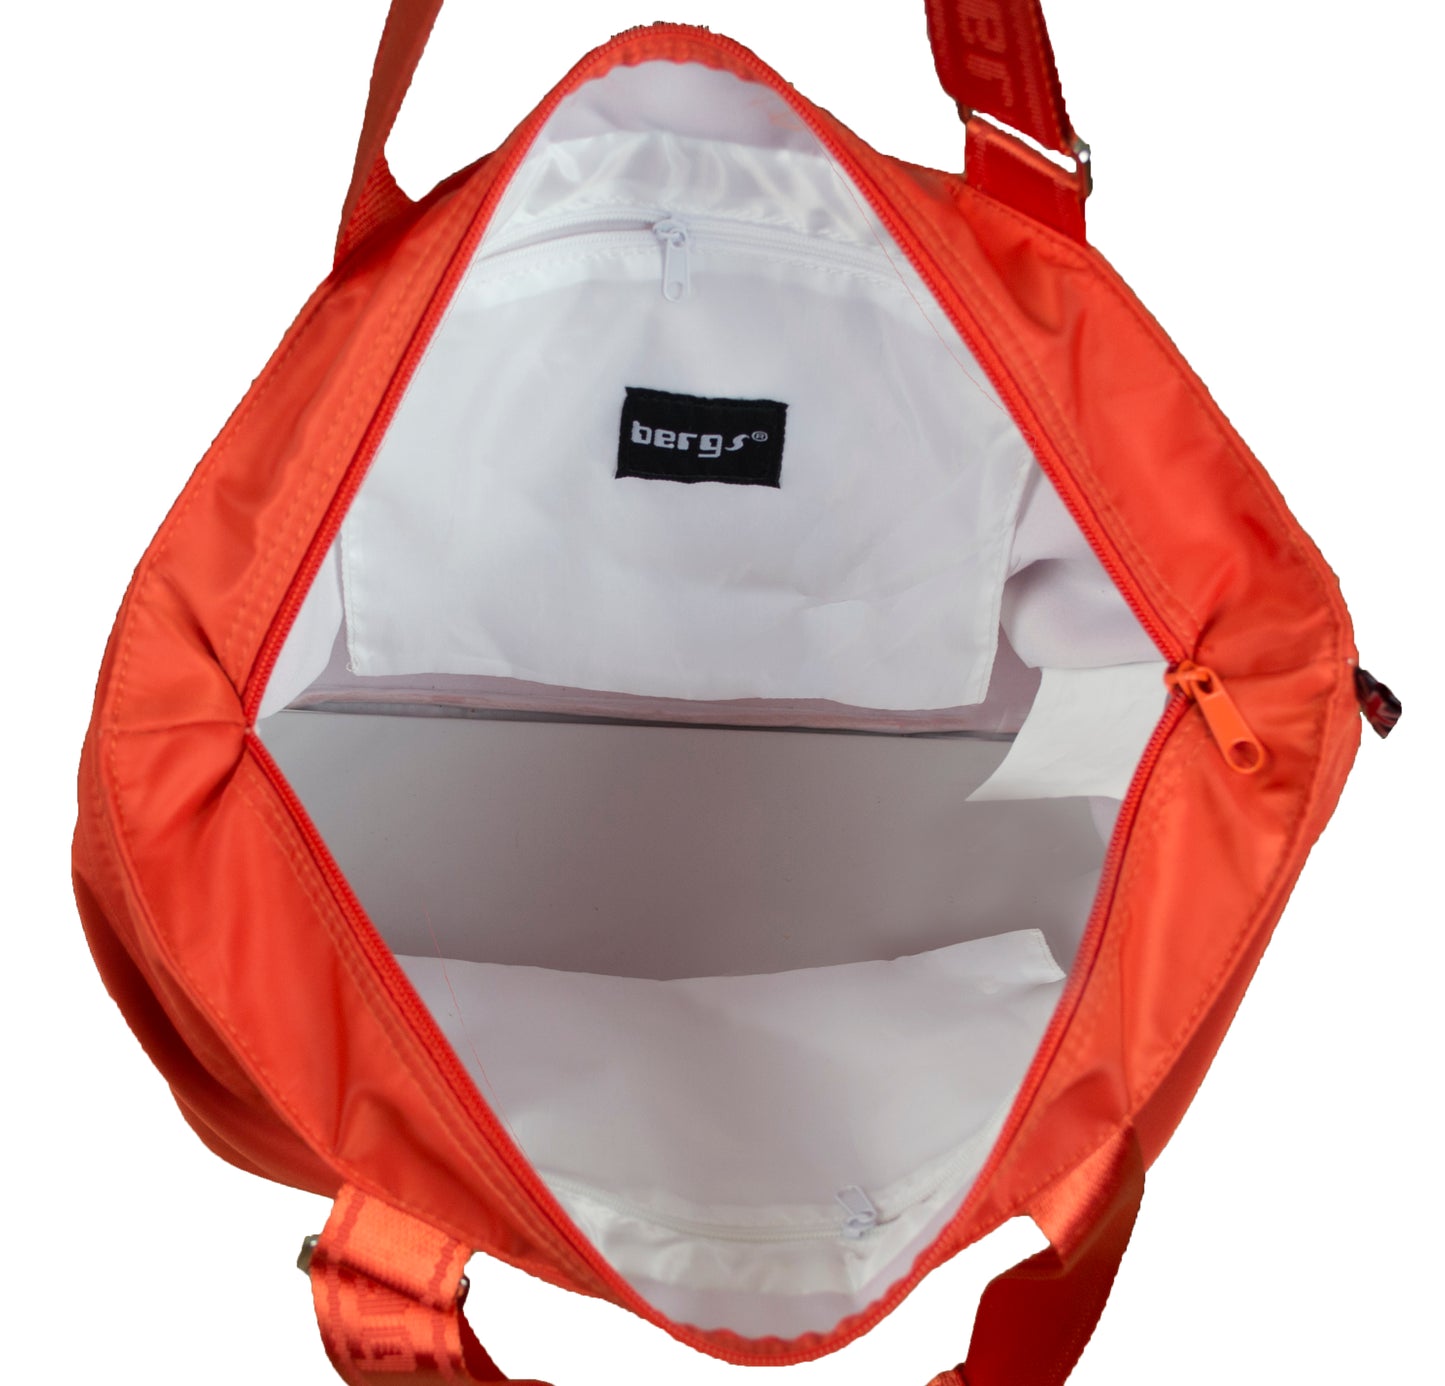 Ladies Trendy Shopping Trolley Foldable Designer Bag